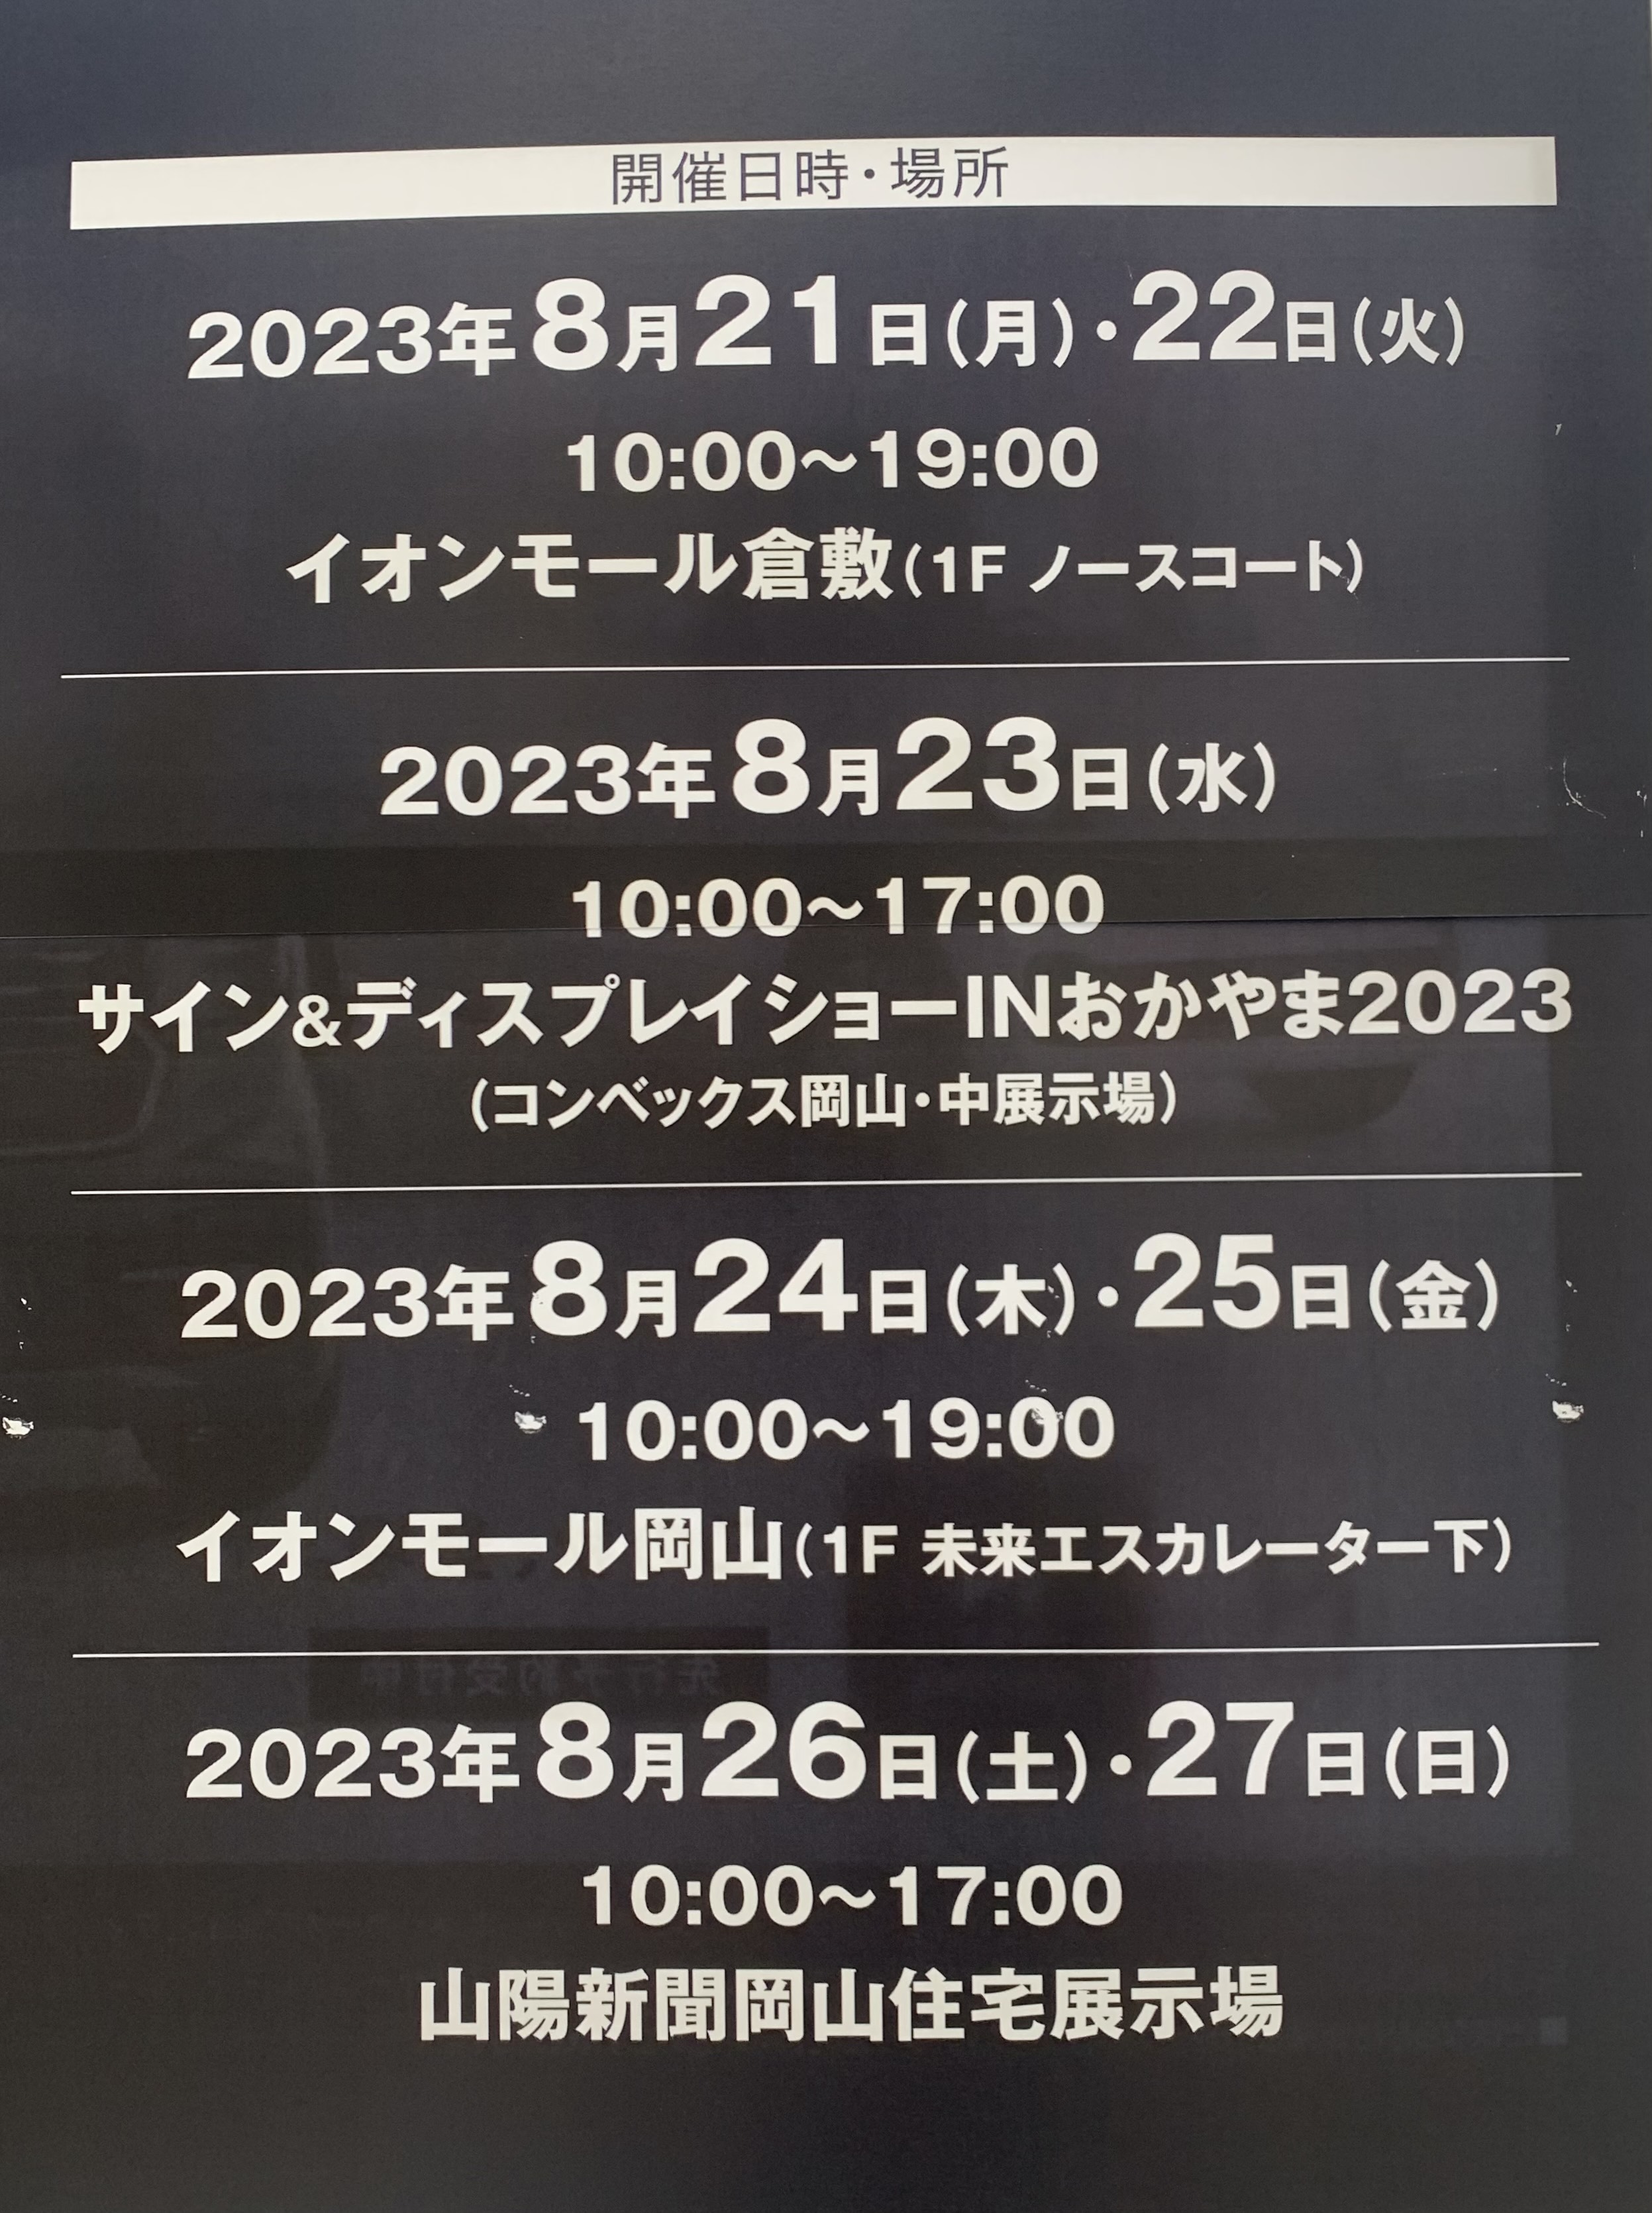 new-n-box-senkou-tenjikai-2023-2